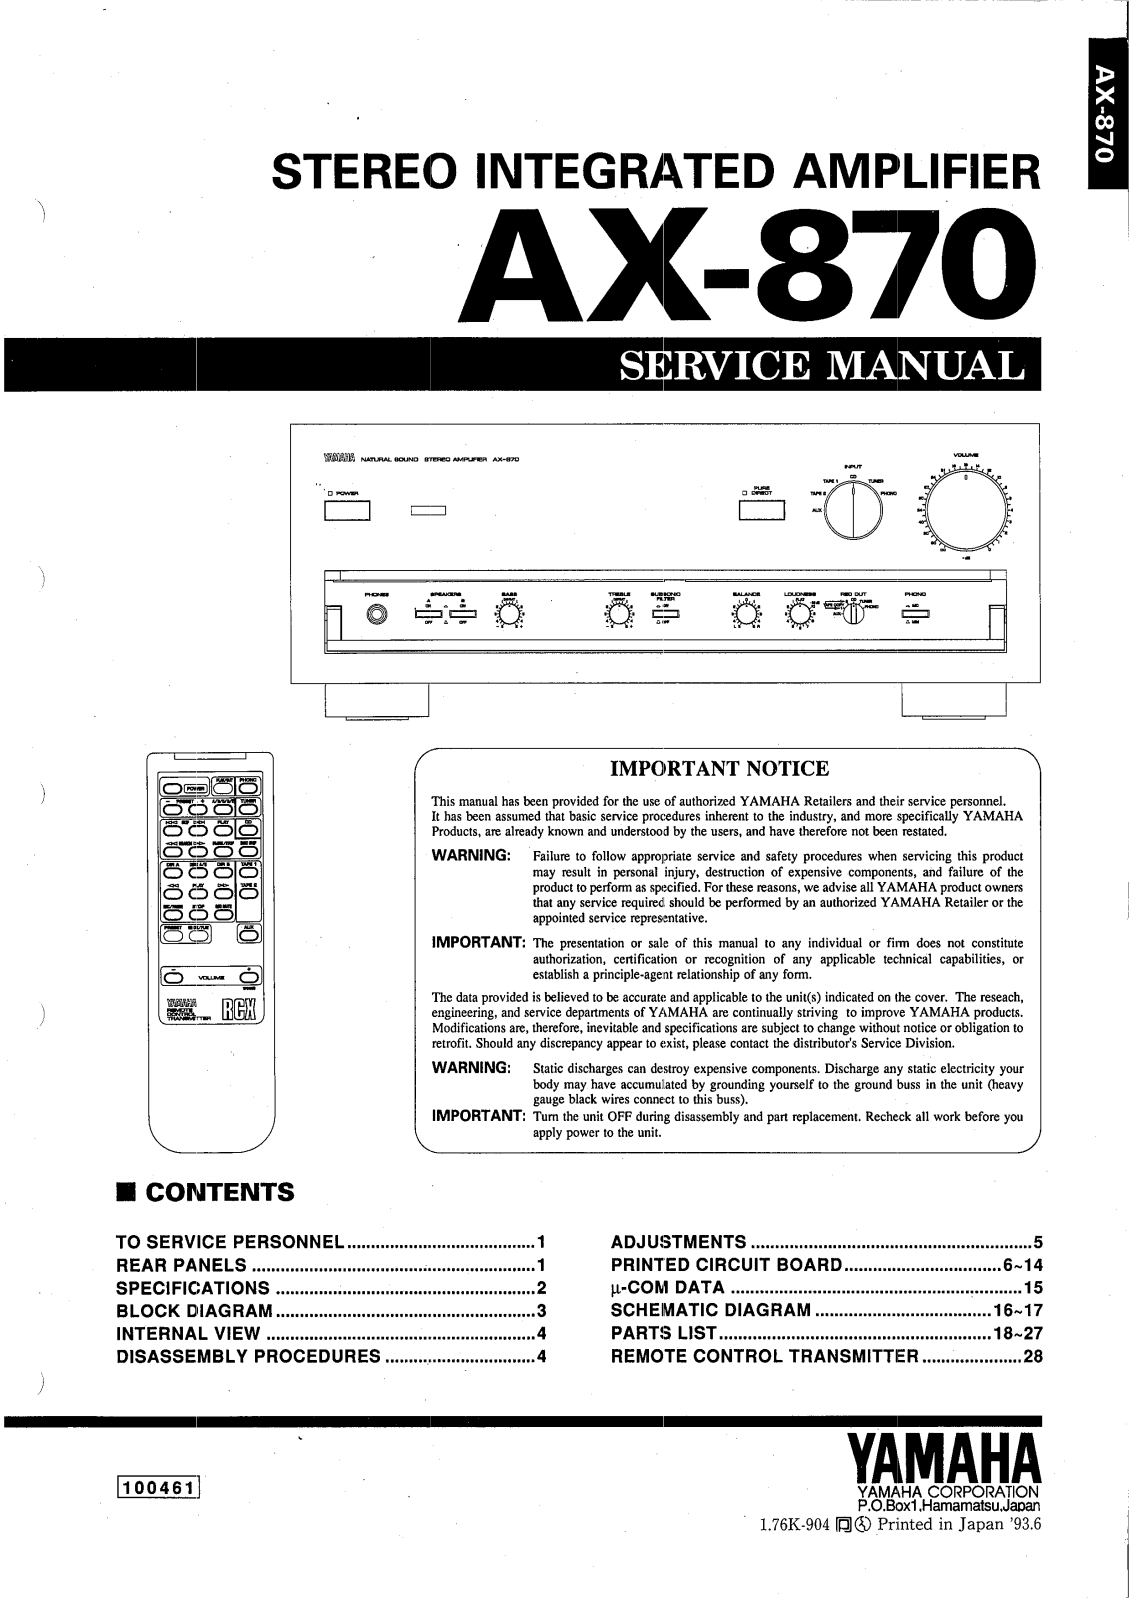 Yamaha AX-870 Service manual